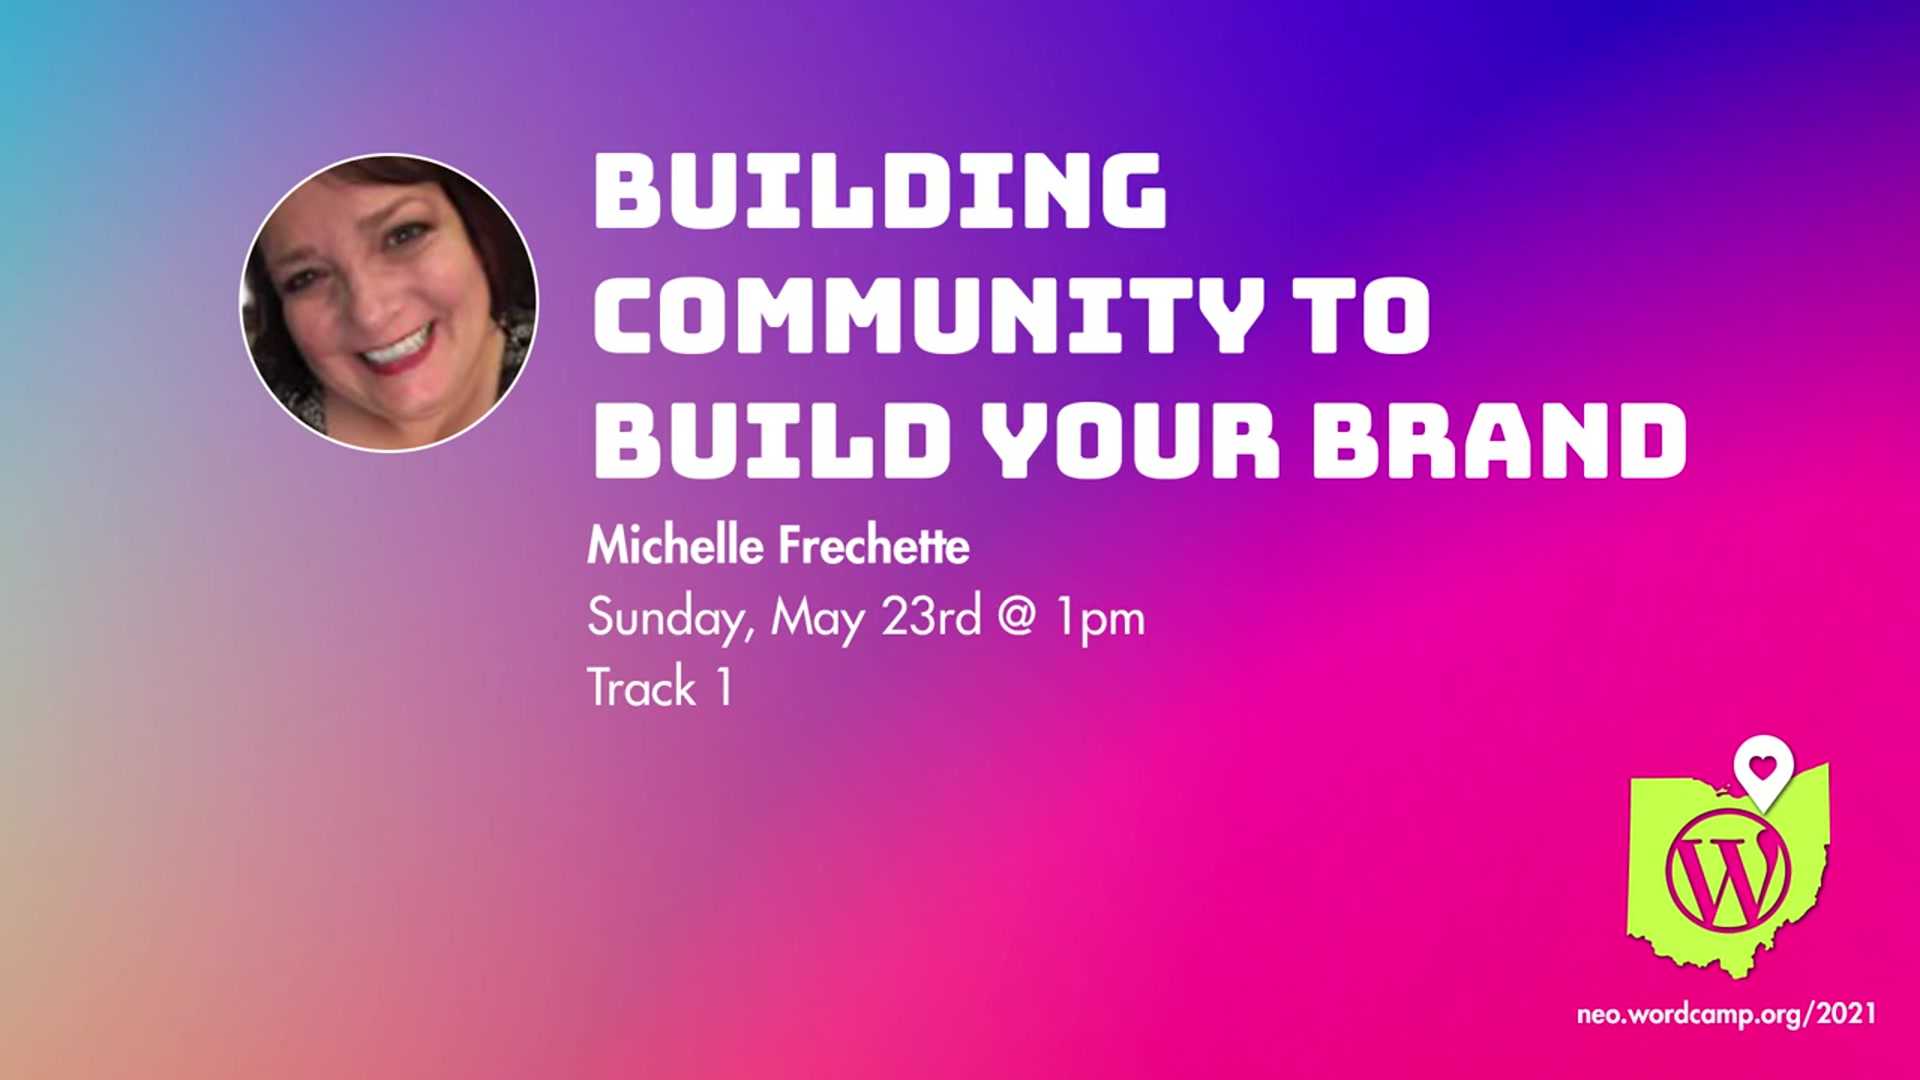 Michelle Frechette: Building community to build your brand